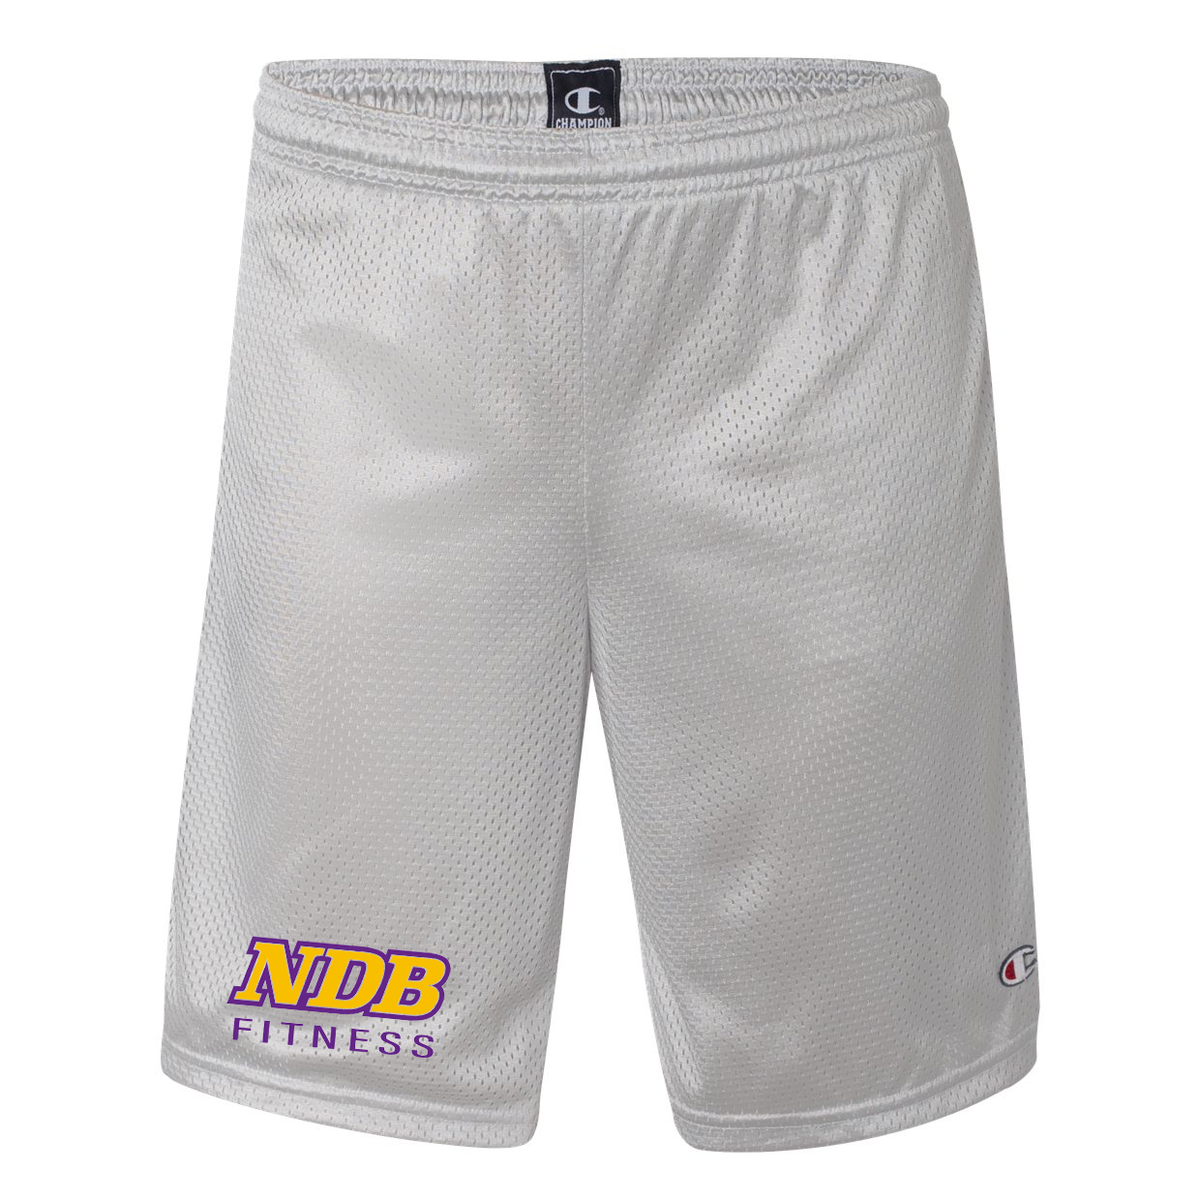 NDB Fitness Champion Mesh Shorts with Pockets